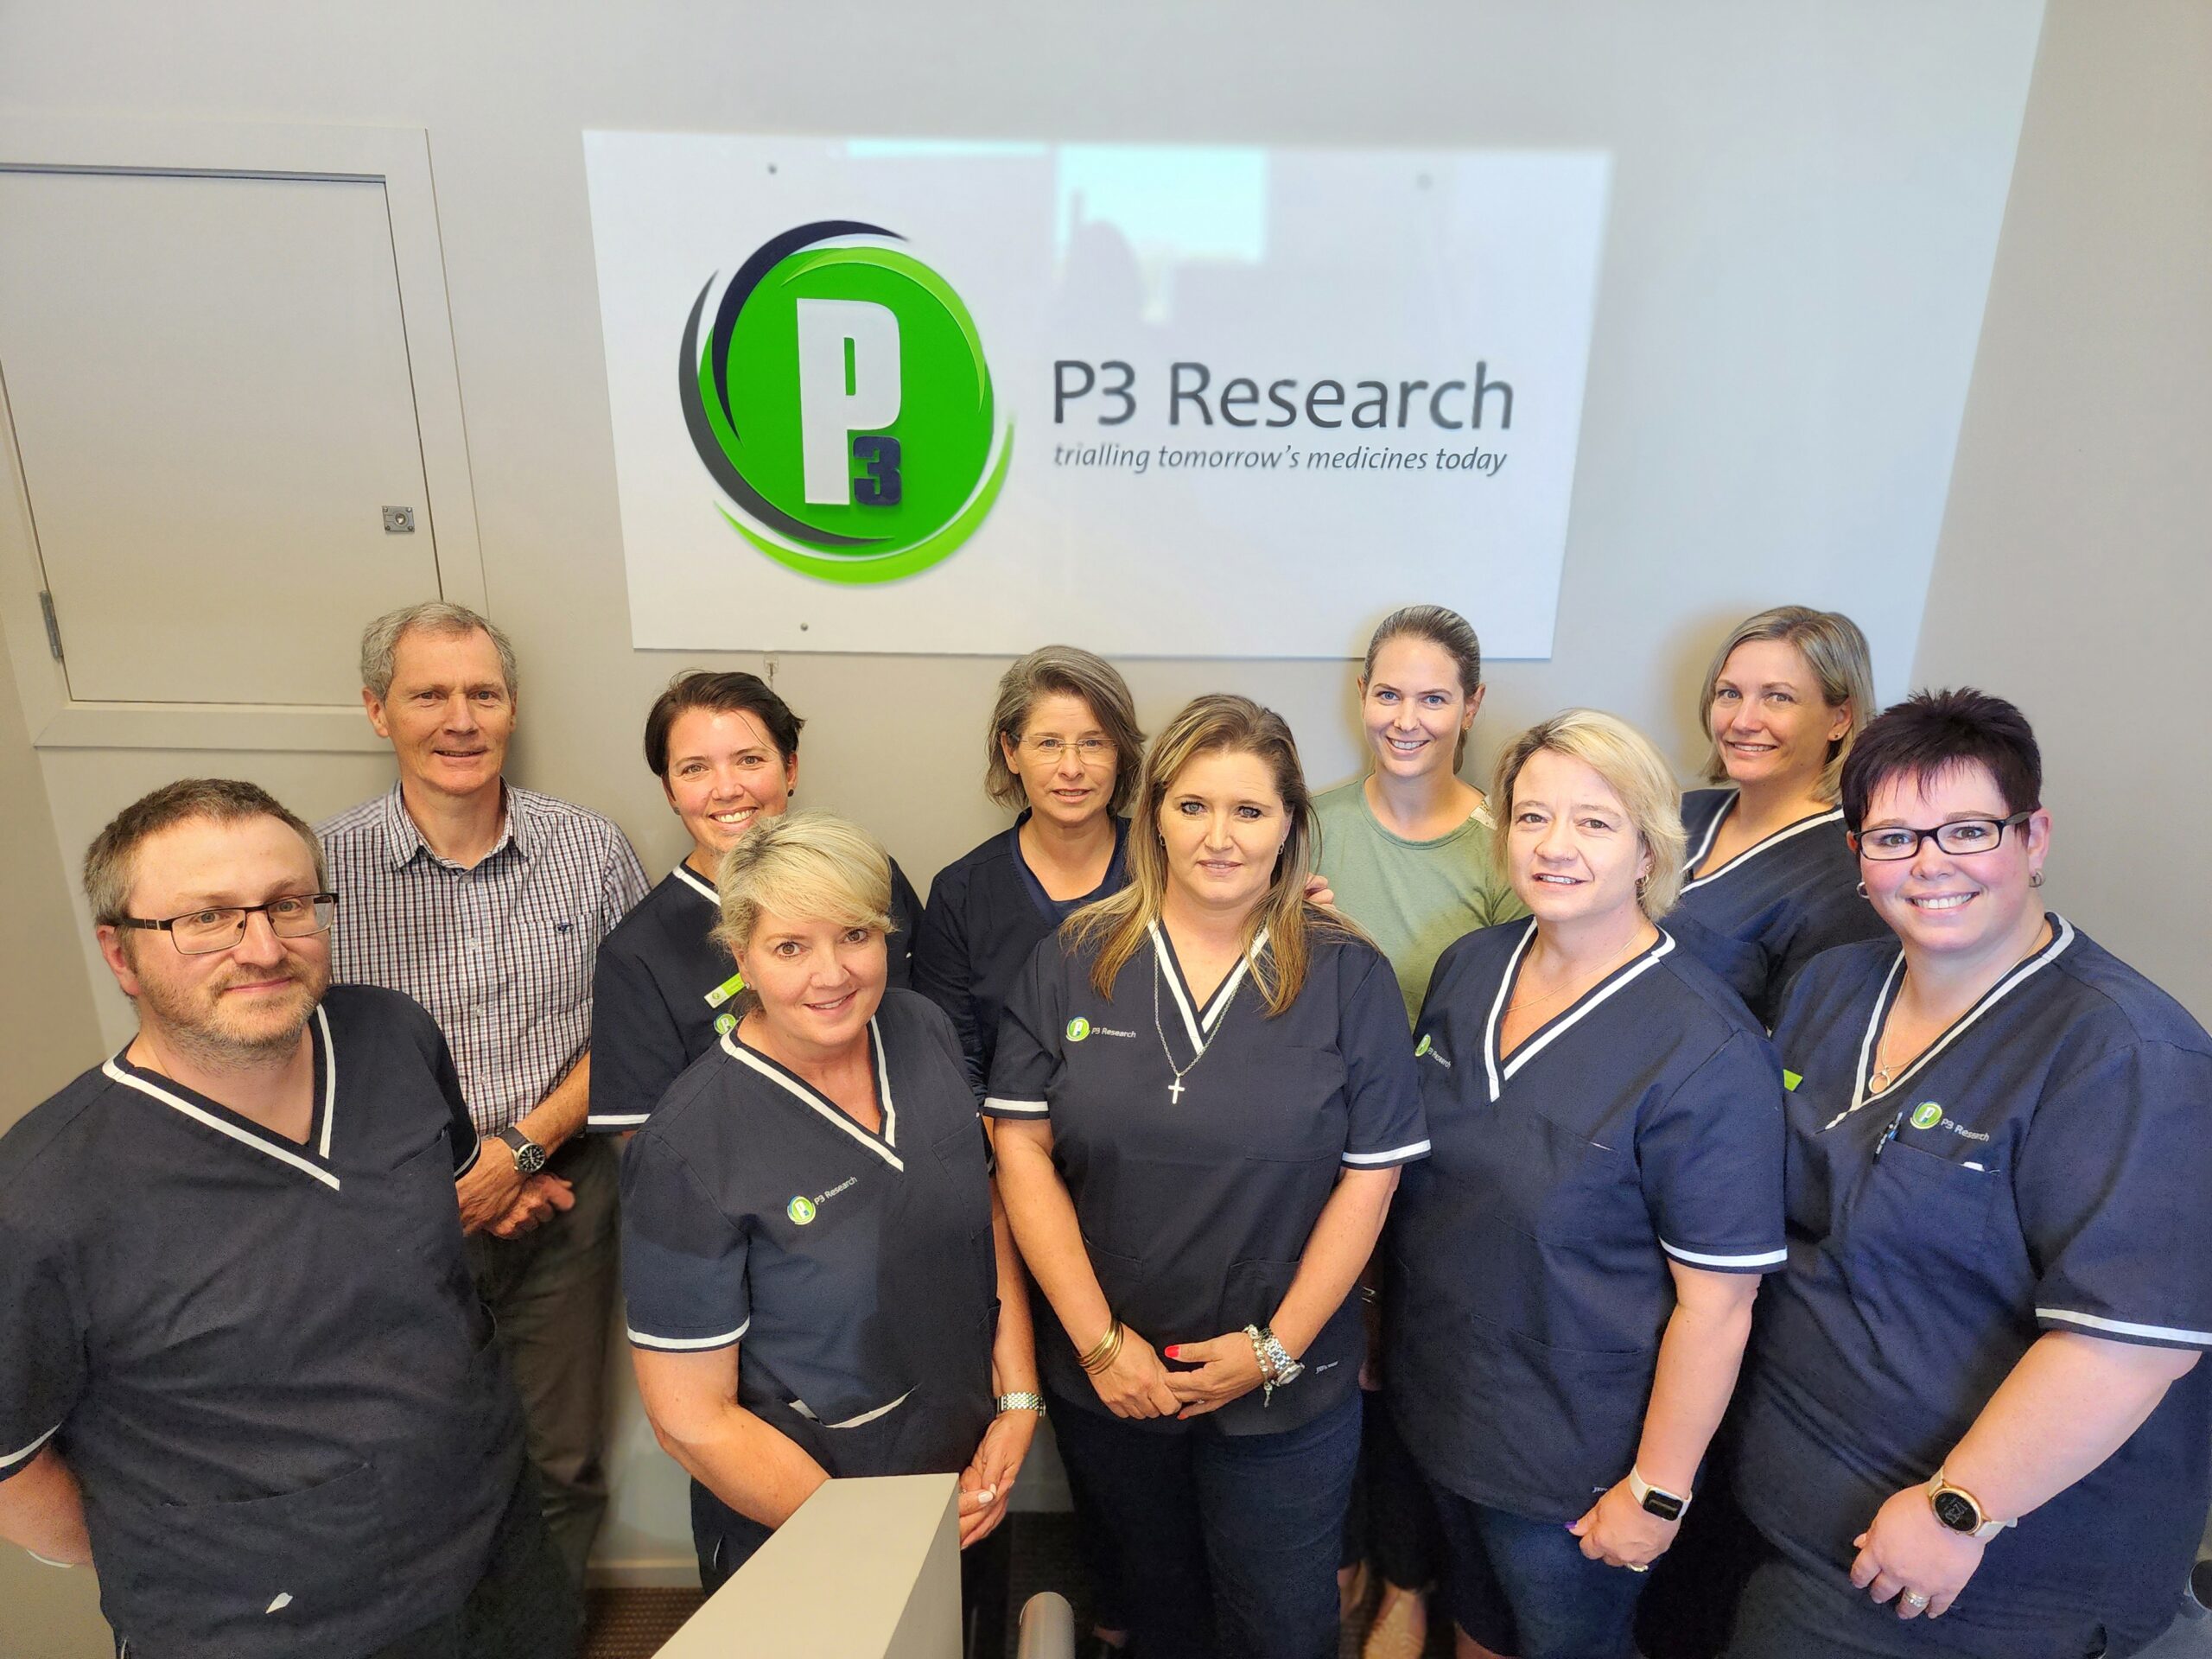 P3 Research Ltd